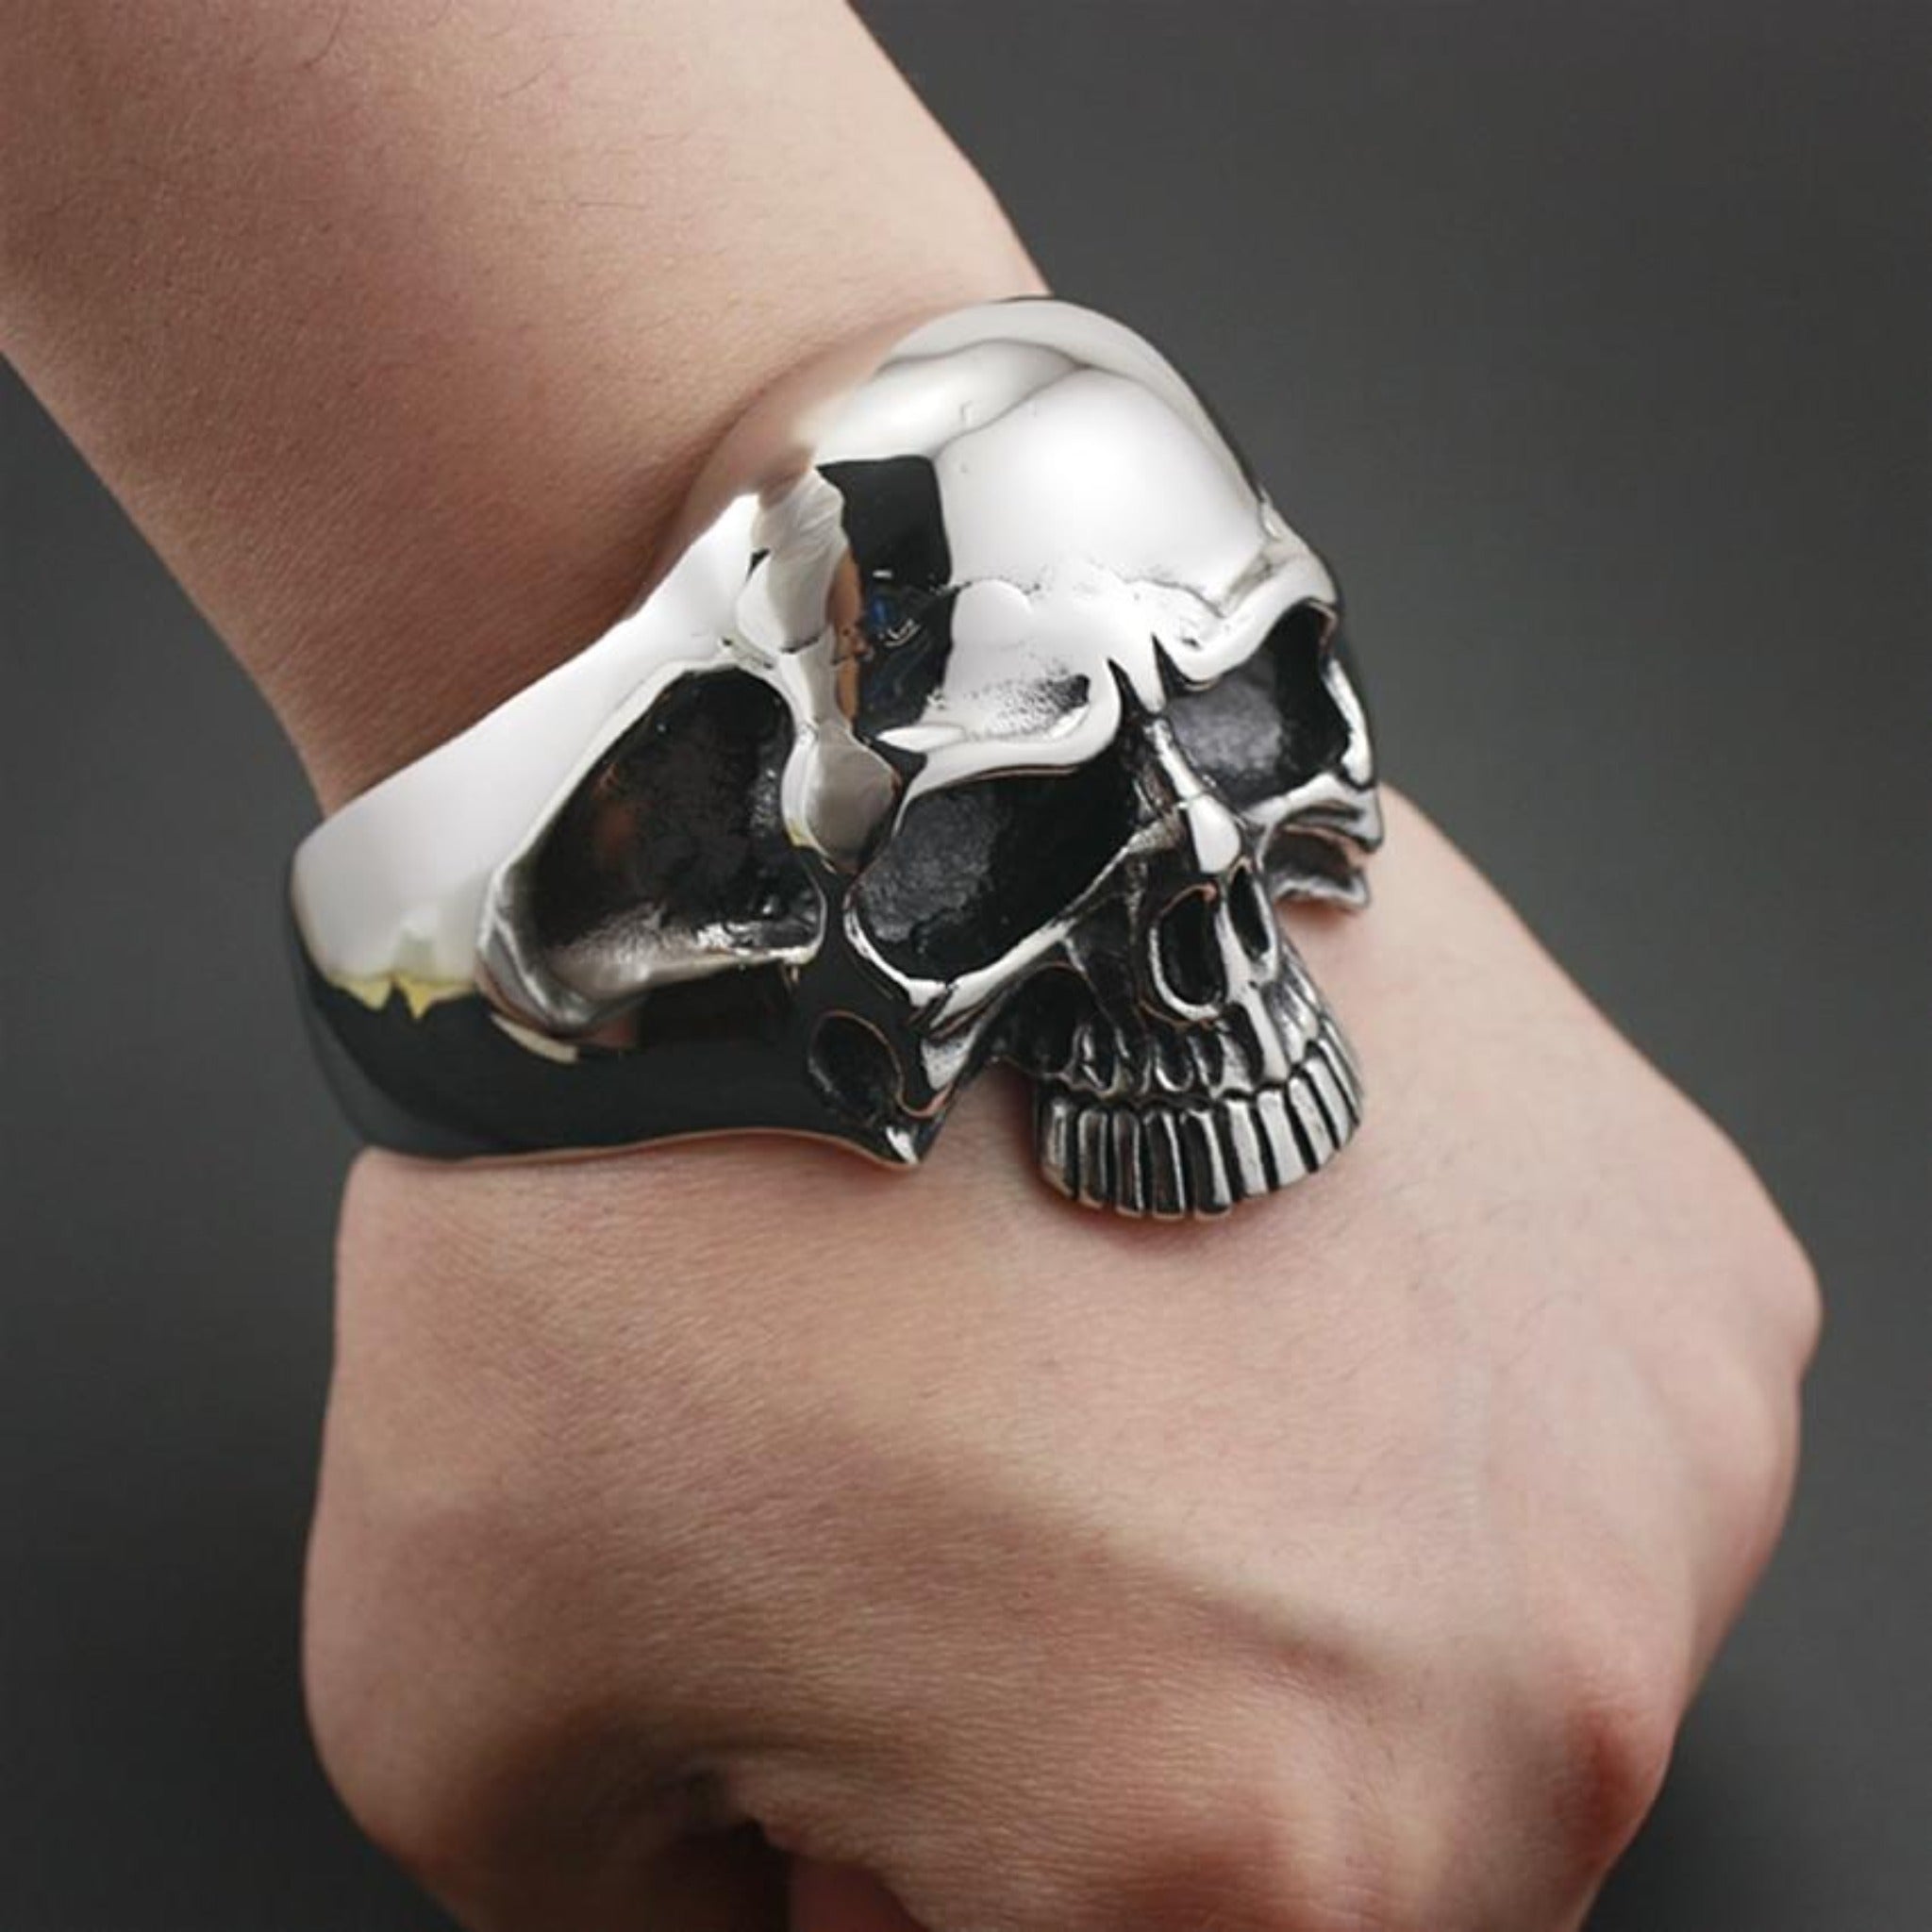 Buy CALANDIS Skeleton Hand Bracelet with Rings Elasticity Wristband for  Party black  Alloy  1 Piece Halloween Skull Skeleton Hand Bracelet with  Ring at Amazonin